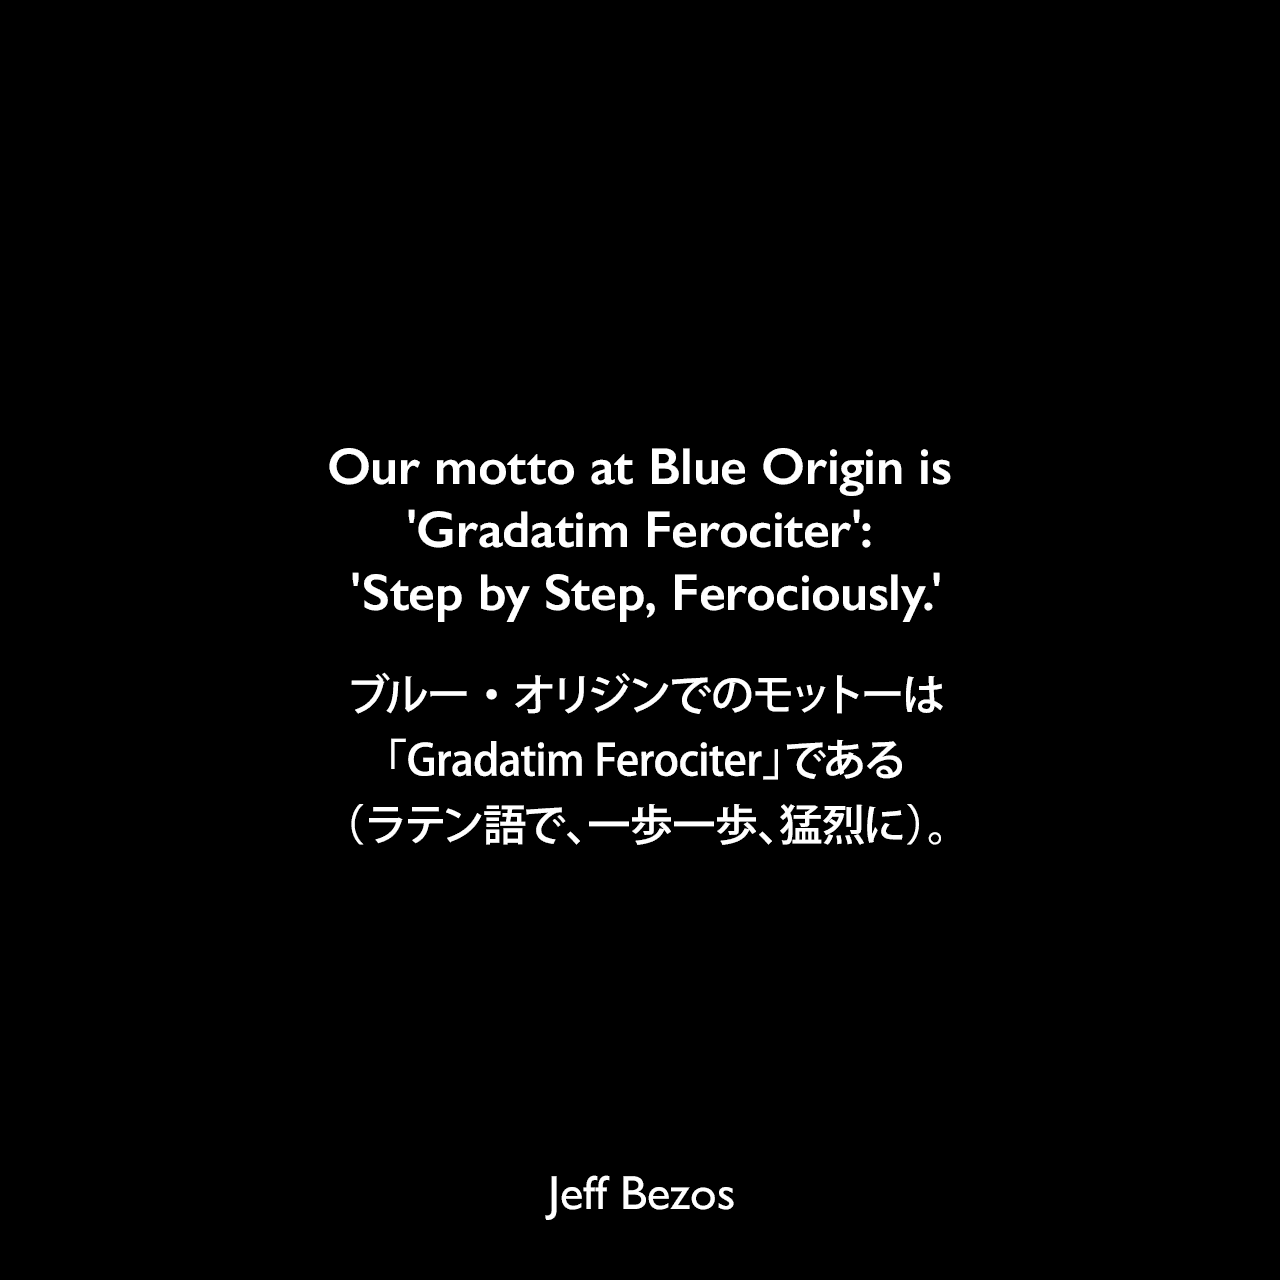 Our motto at Blue Origin is 'Gradatim Ferociter': 'Step by Step, Ferociously.'ブルー・オリジンでのモットーは「Gradatim Ferociter」である（ラテン語で、一歩一歩、猛烈に）。Jeff Bezos